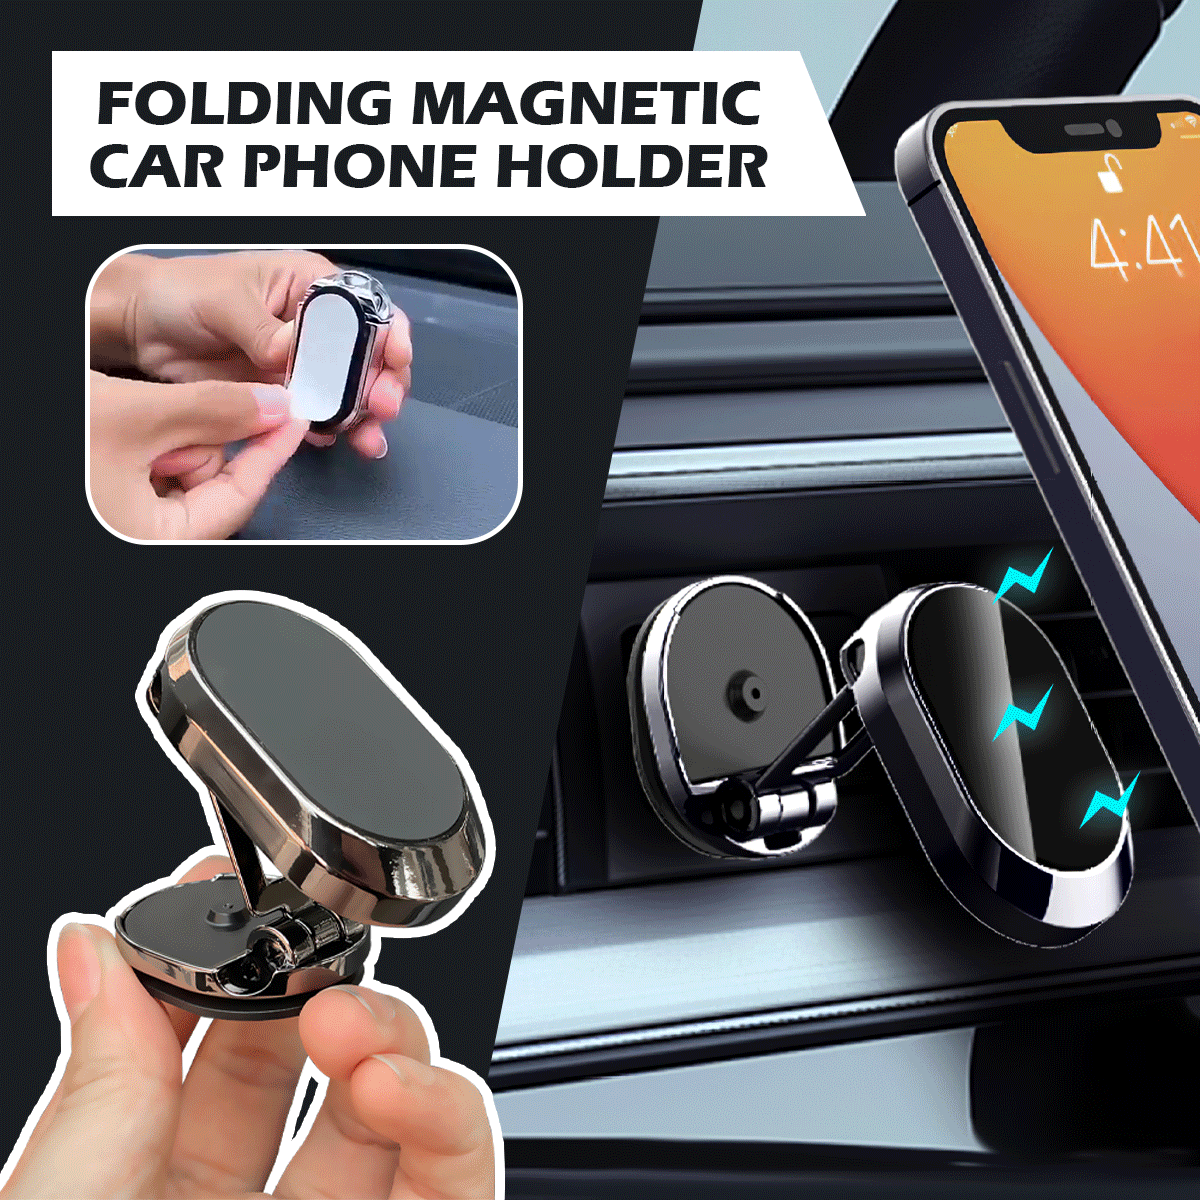 Folding Magnetic Car Phone Holder - Cars & Motorbikes